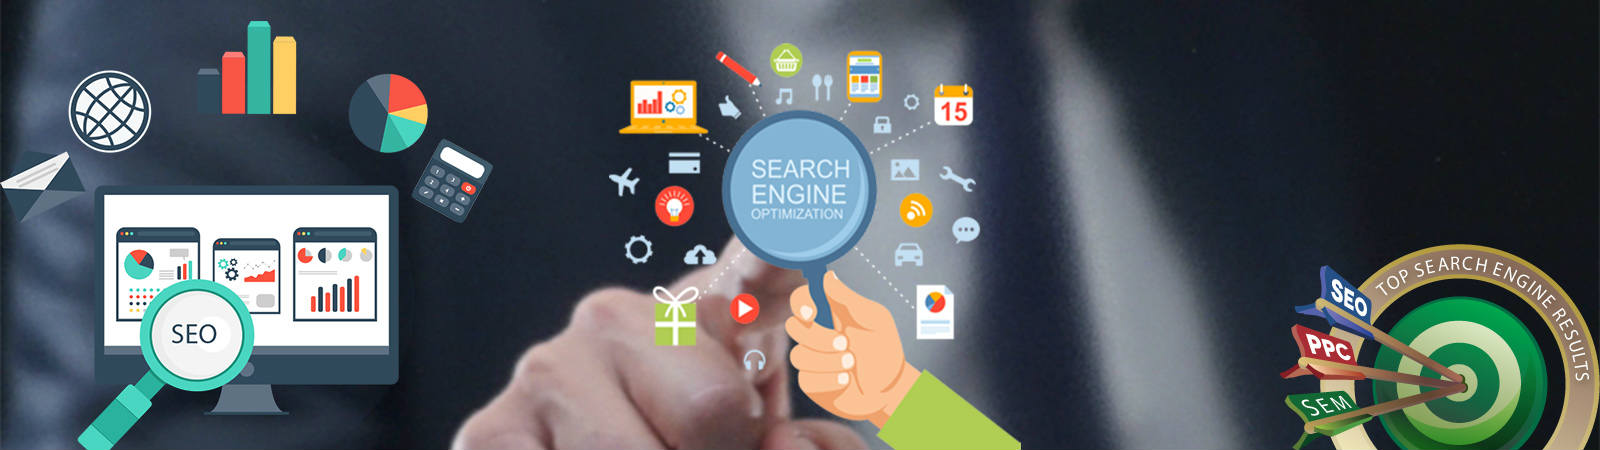 SEO Company India & USA | Best Search Engine Optimization Services Provider